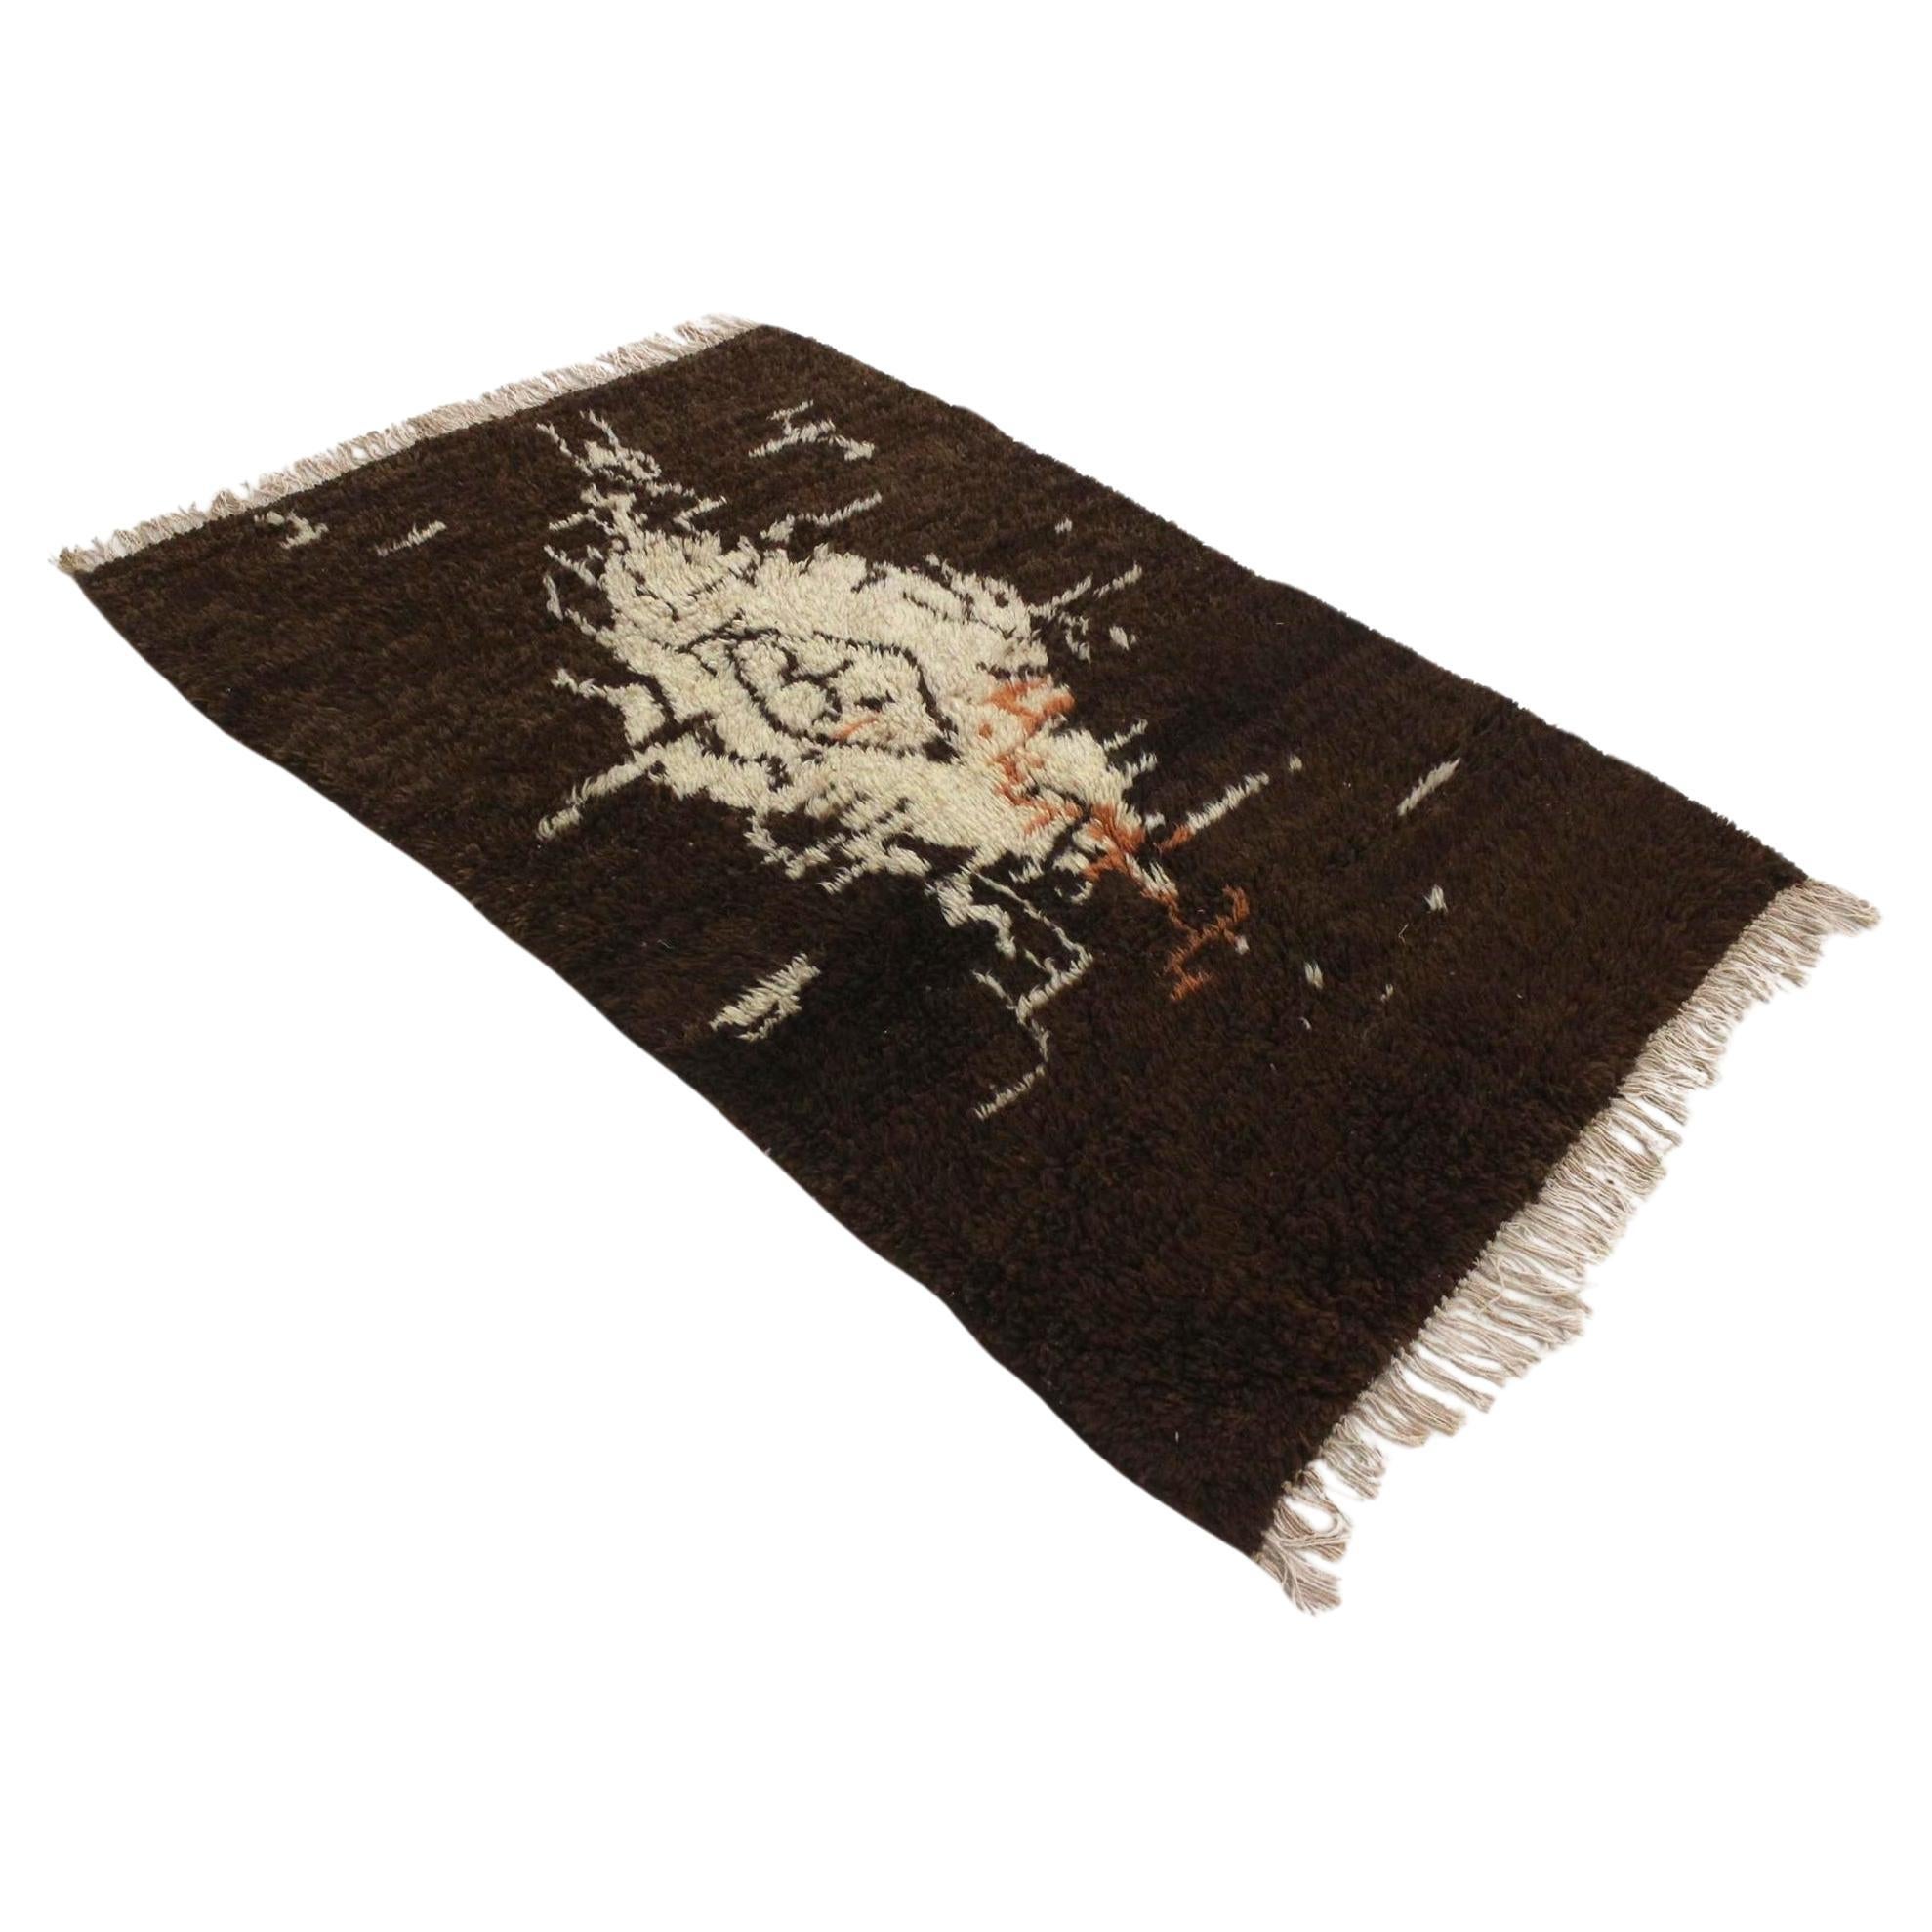 Vintage Moroccan Azilal rug - Brown/beige - 3.5x5.4feet / 108x165cm